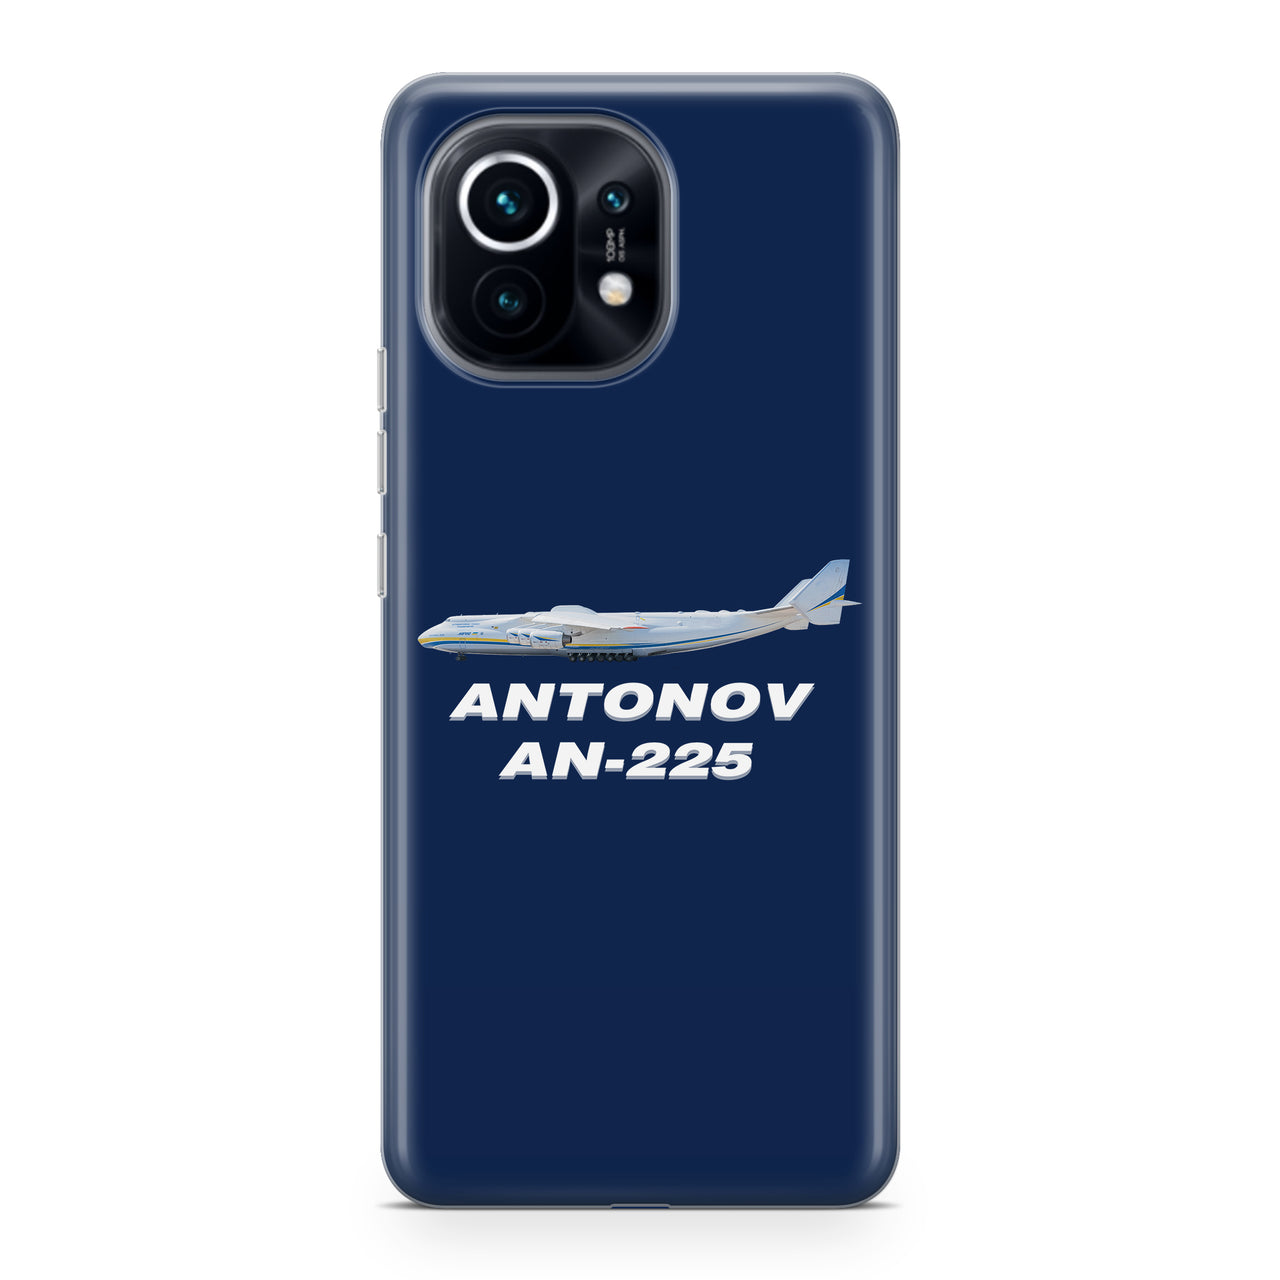 The Antonov AN-225 Designed Xiaomi Cases